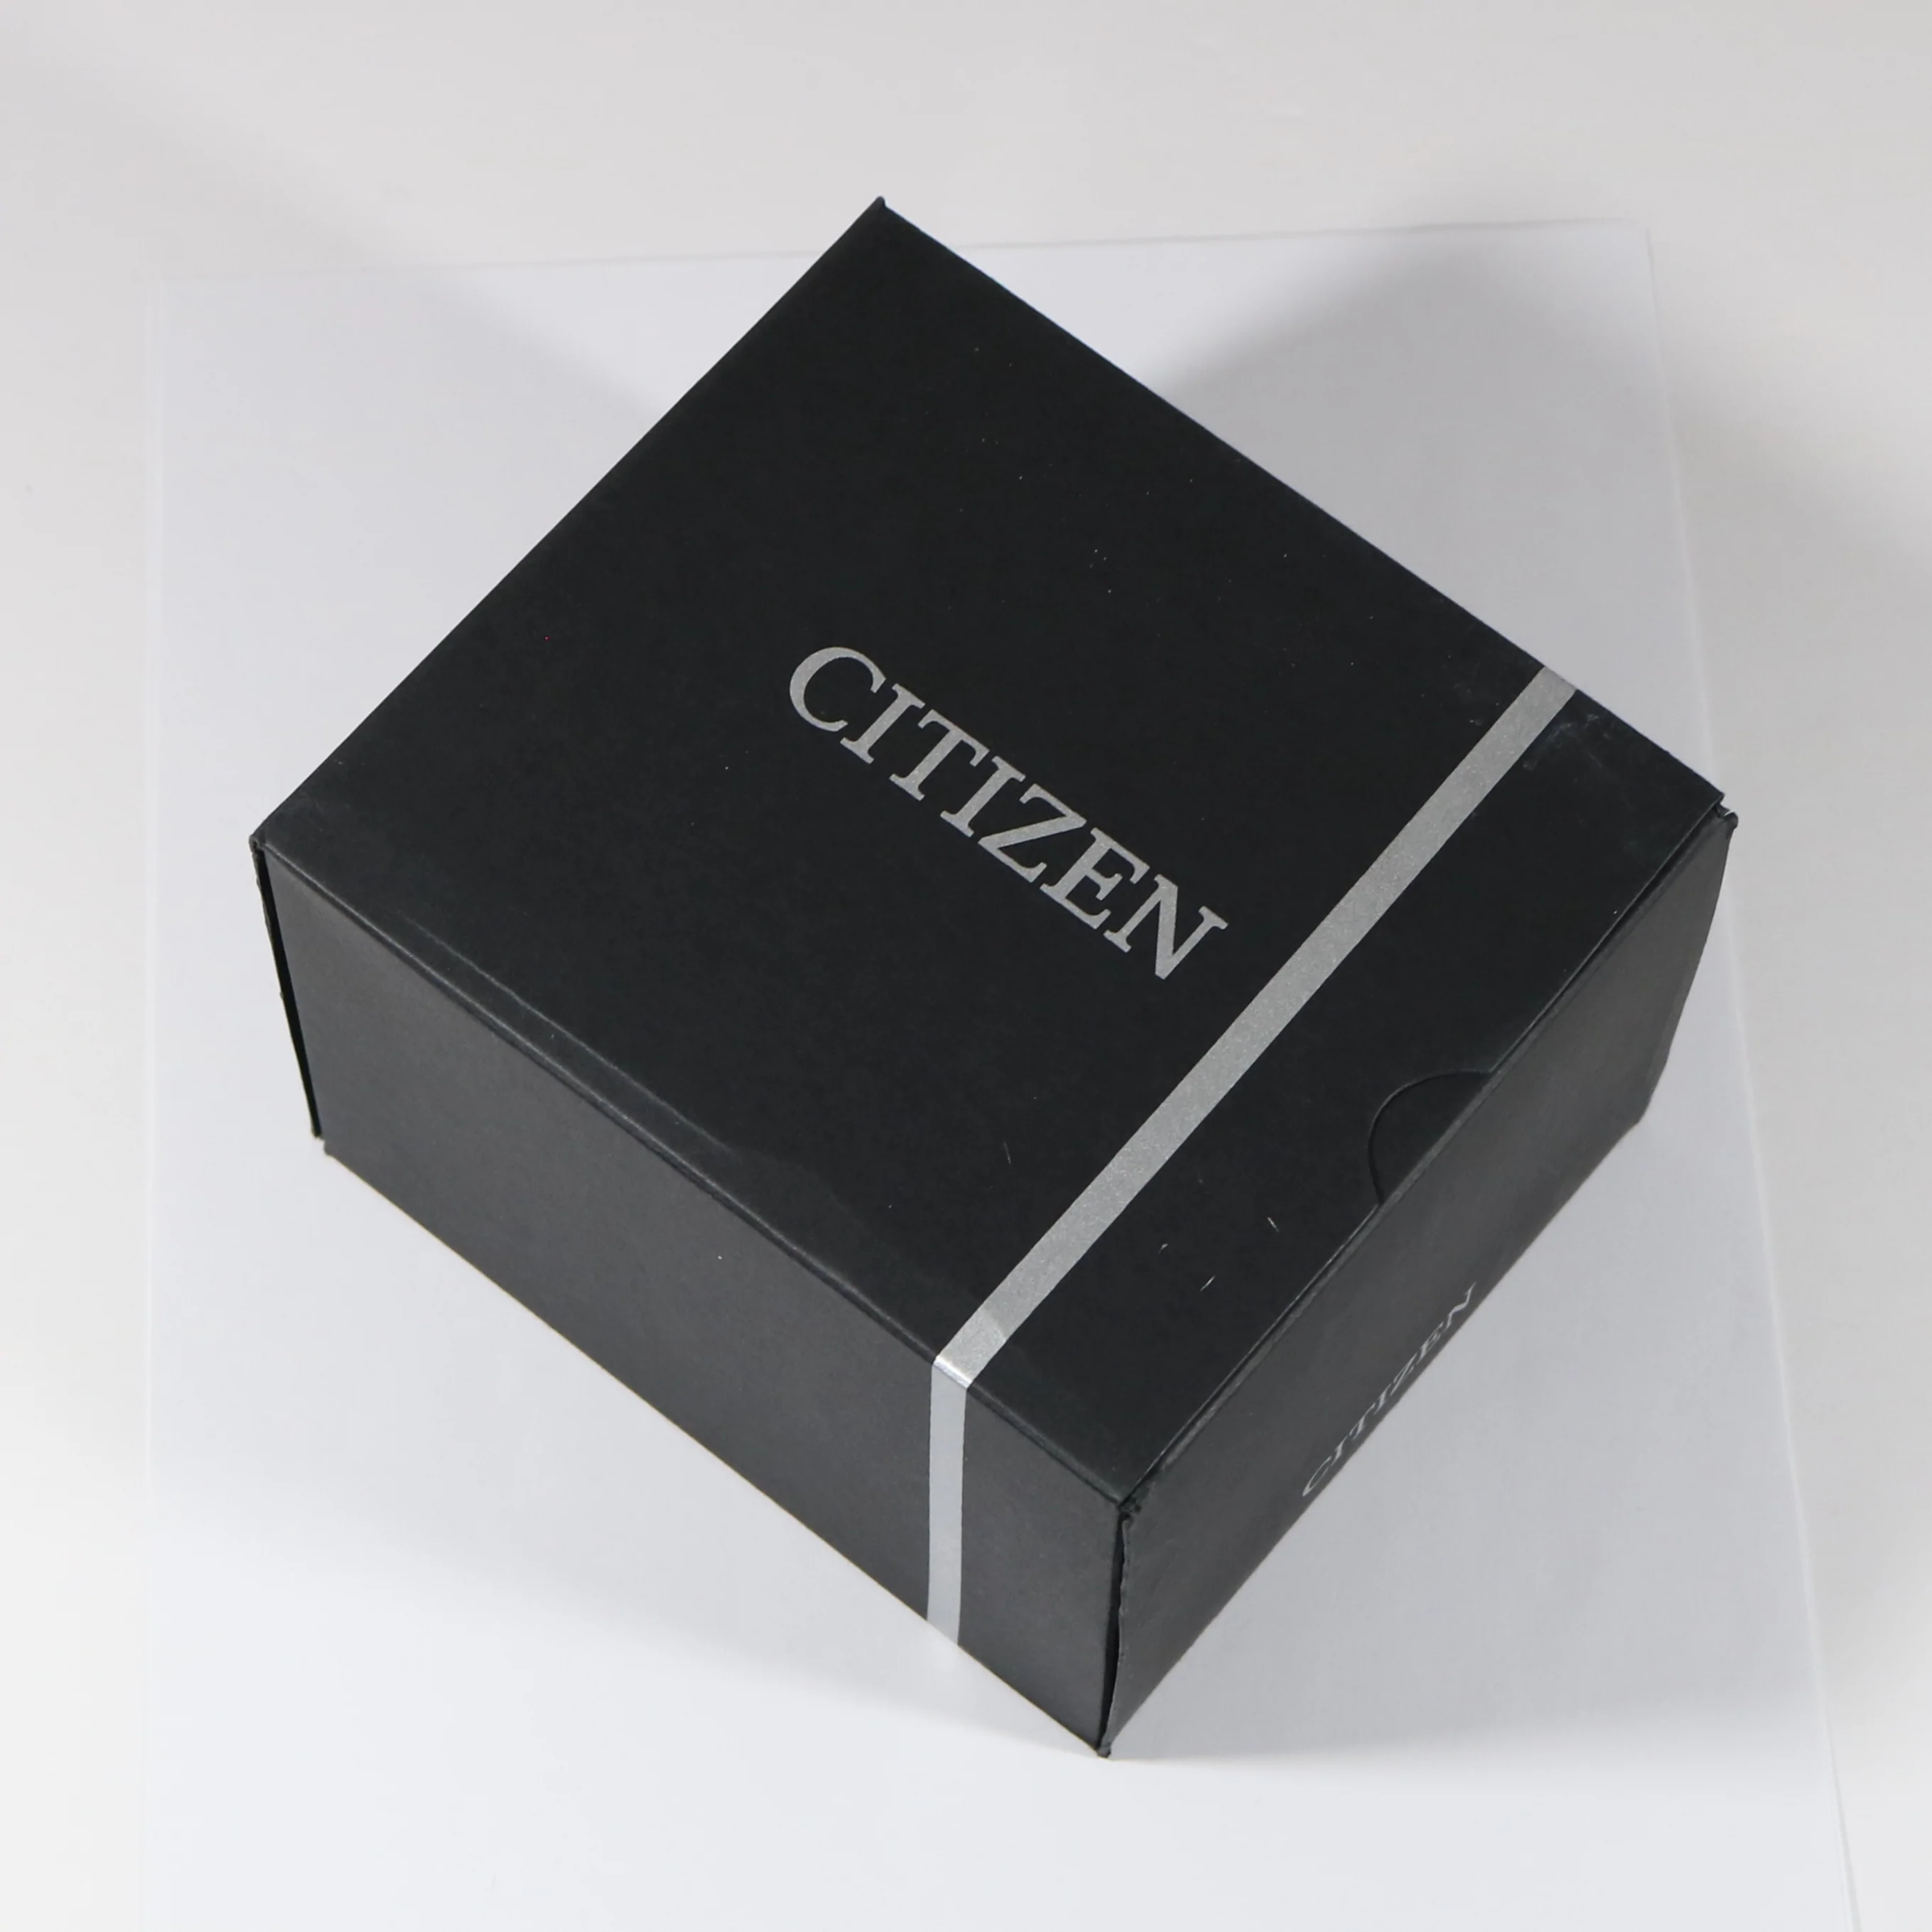 Citizen Tsuyosa Green Dial Automatic Men's Watch NJ0150-81X